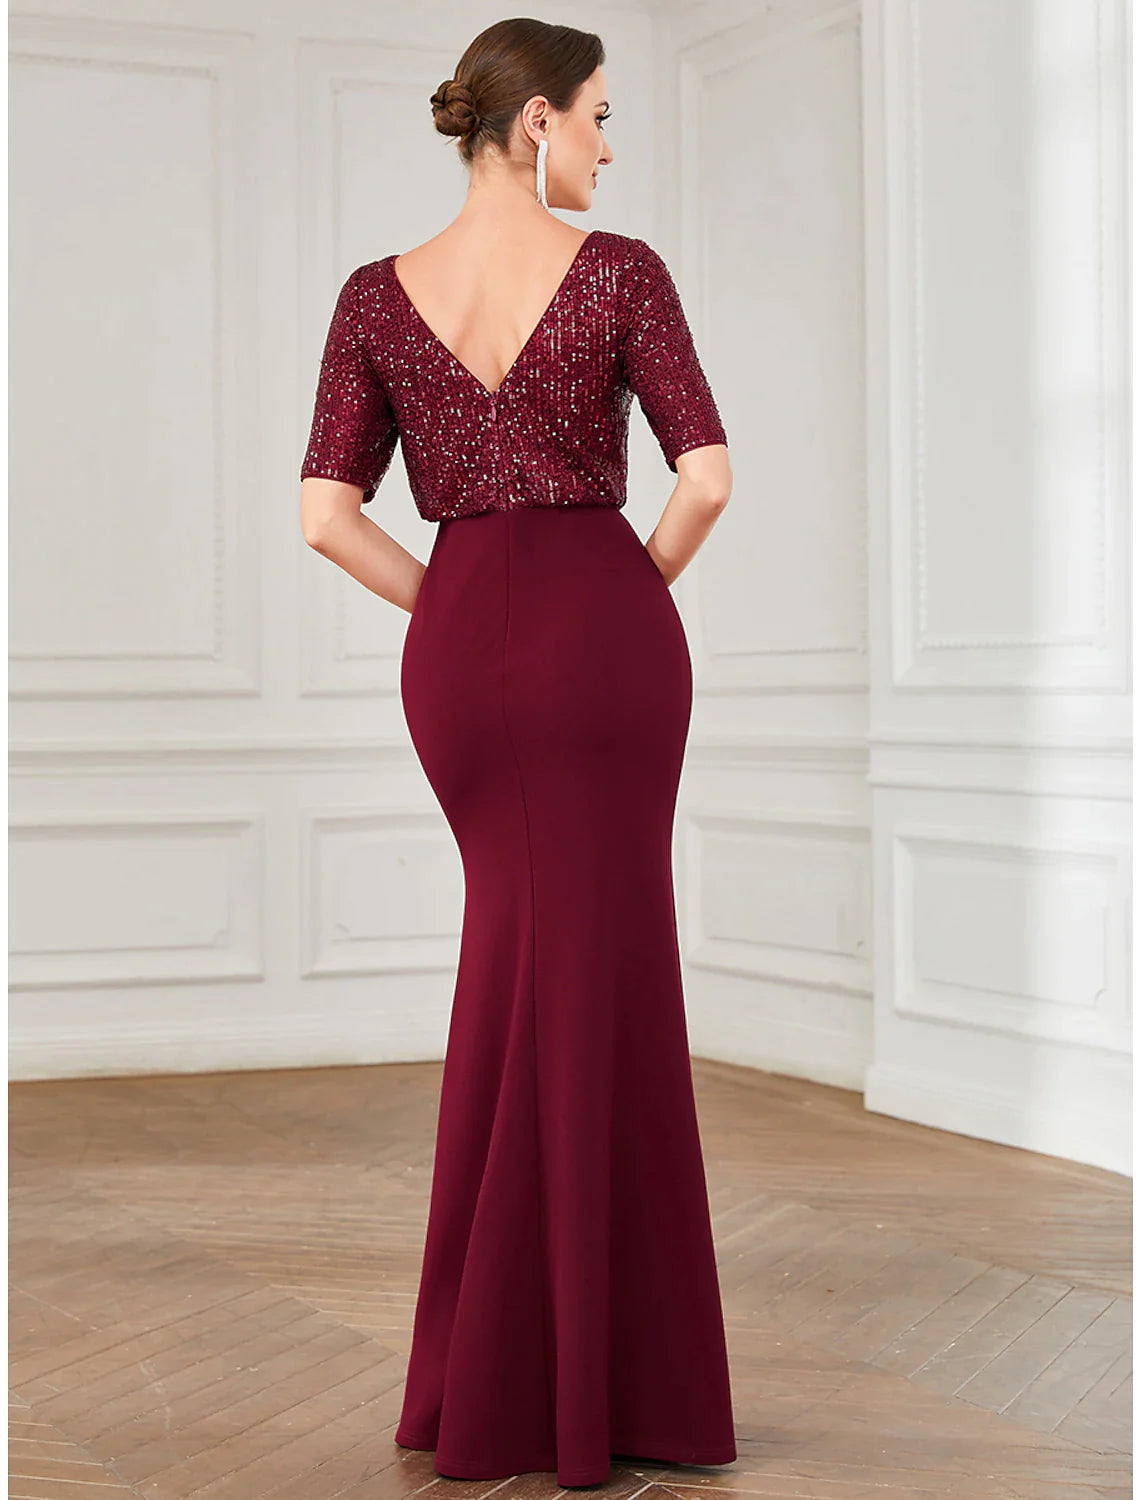 Mermaid / Trumpet Evening Gown Elegant Dress Party Wear Floor Length Half Sleeve Jewel Neck Sequined with Sequin